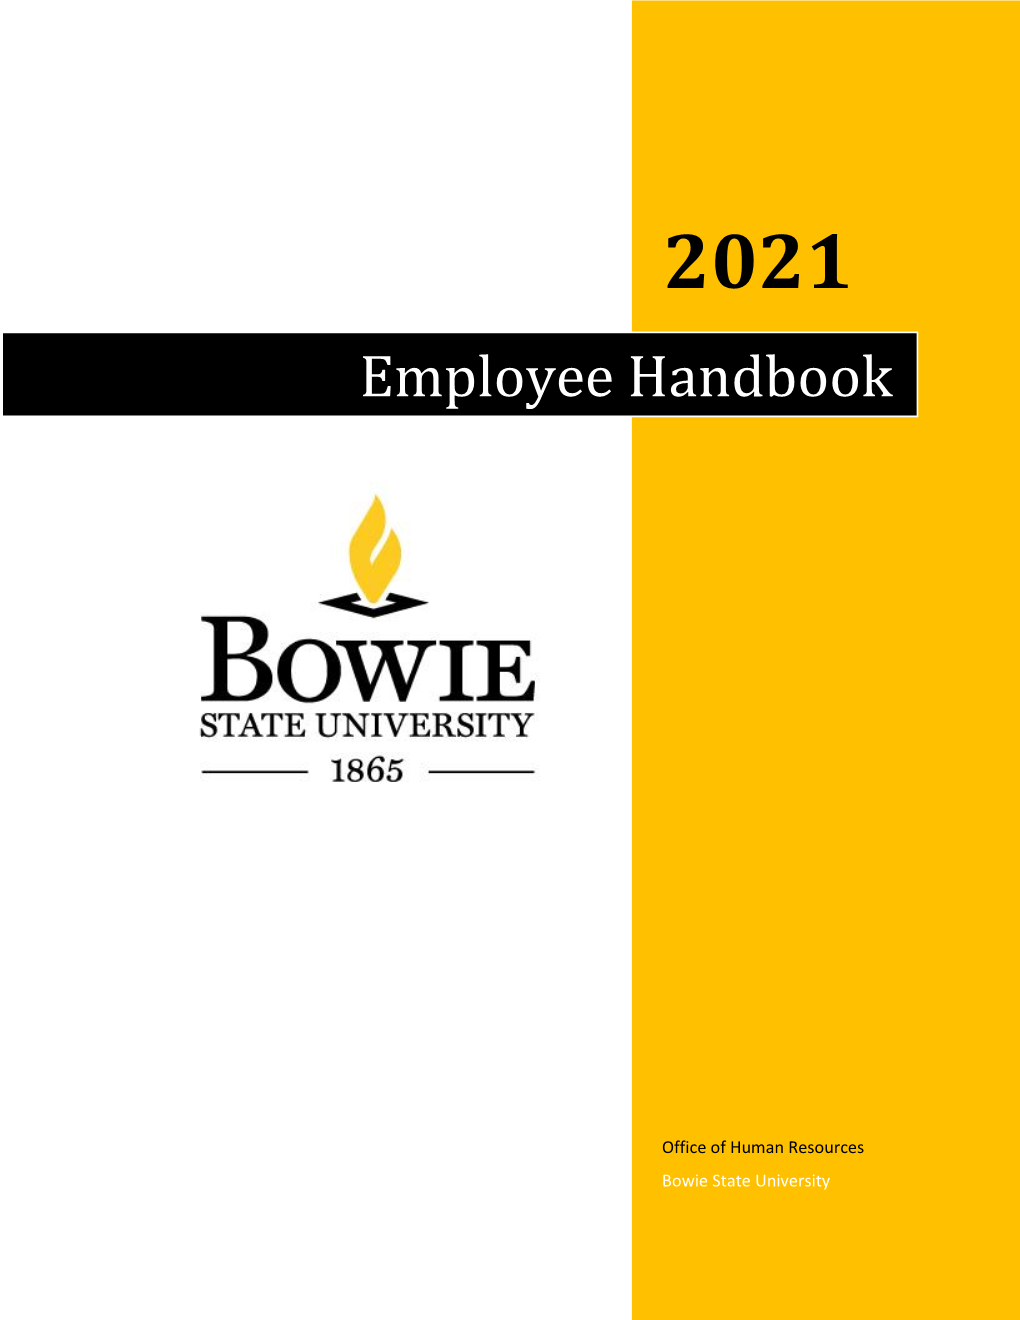 The 2021 Employee Handbook